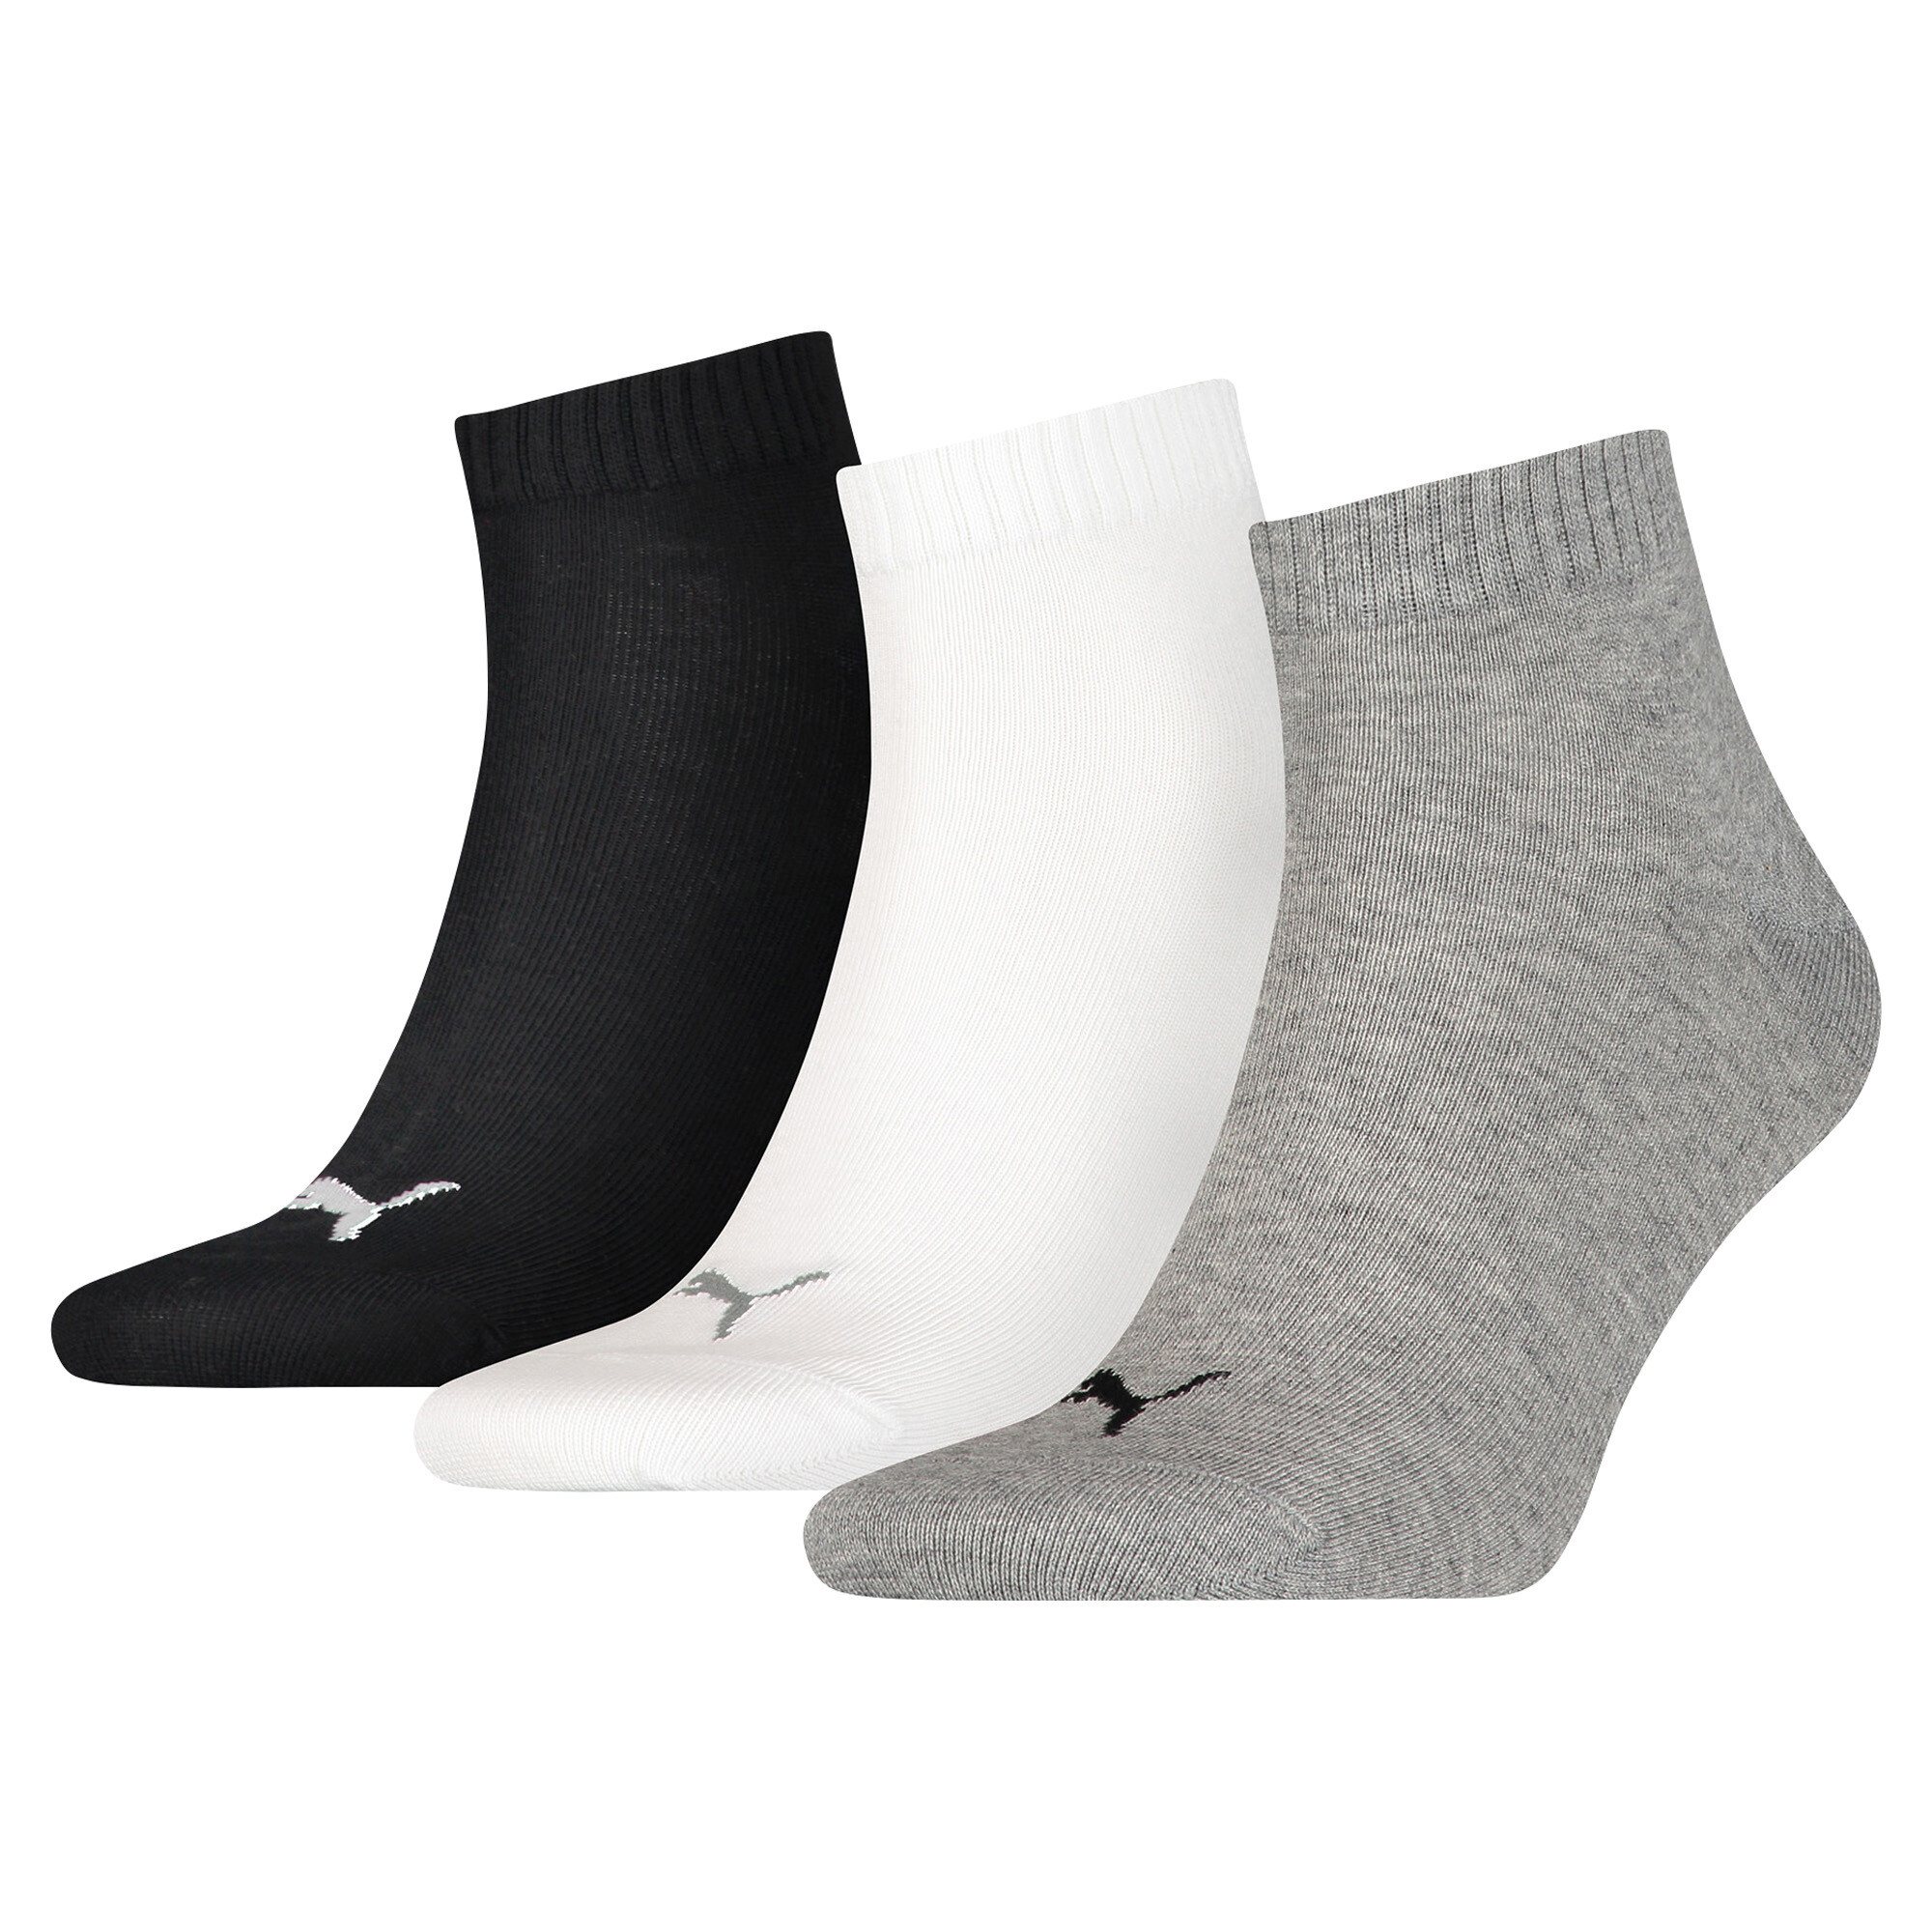 Pack de 3 pares de calcetines tobilleros - GRIS - Kiabi - 6.00€